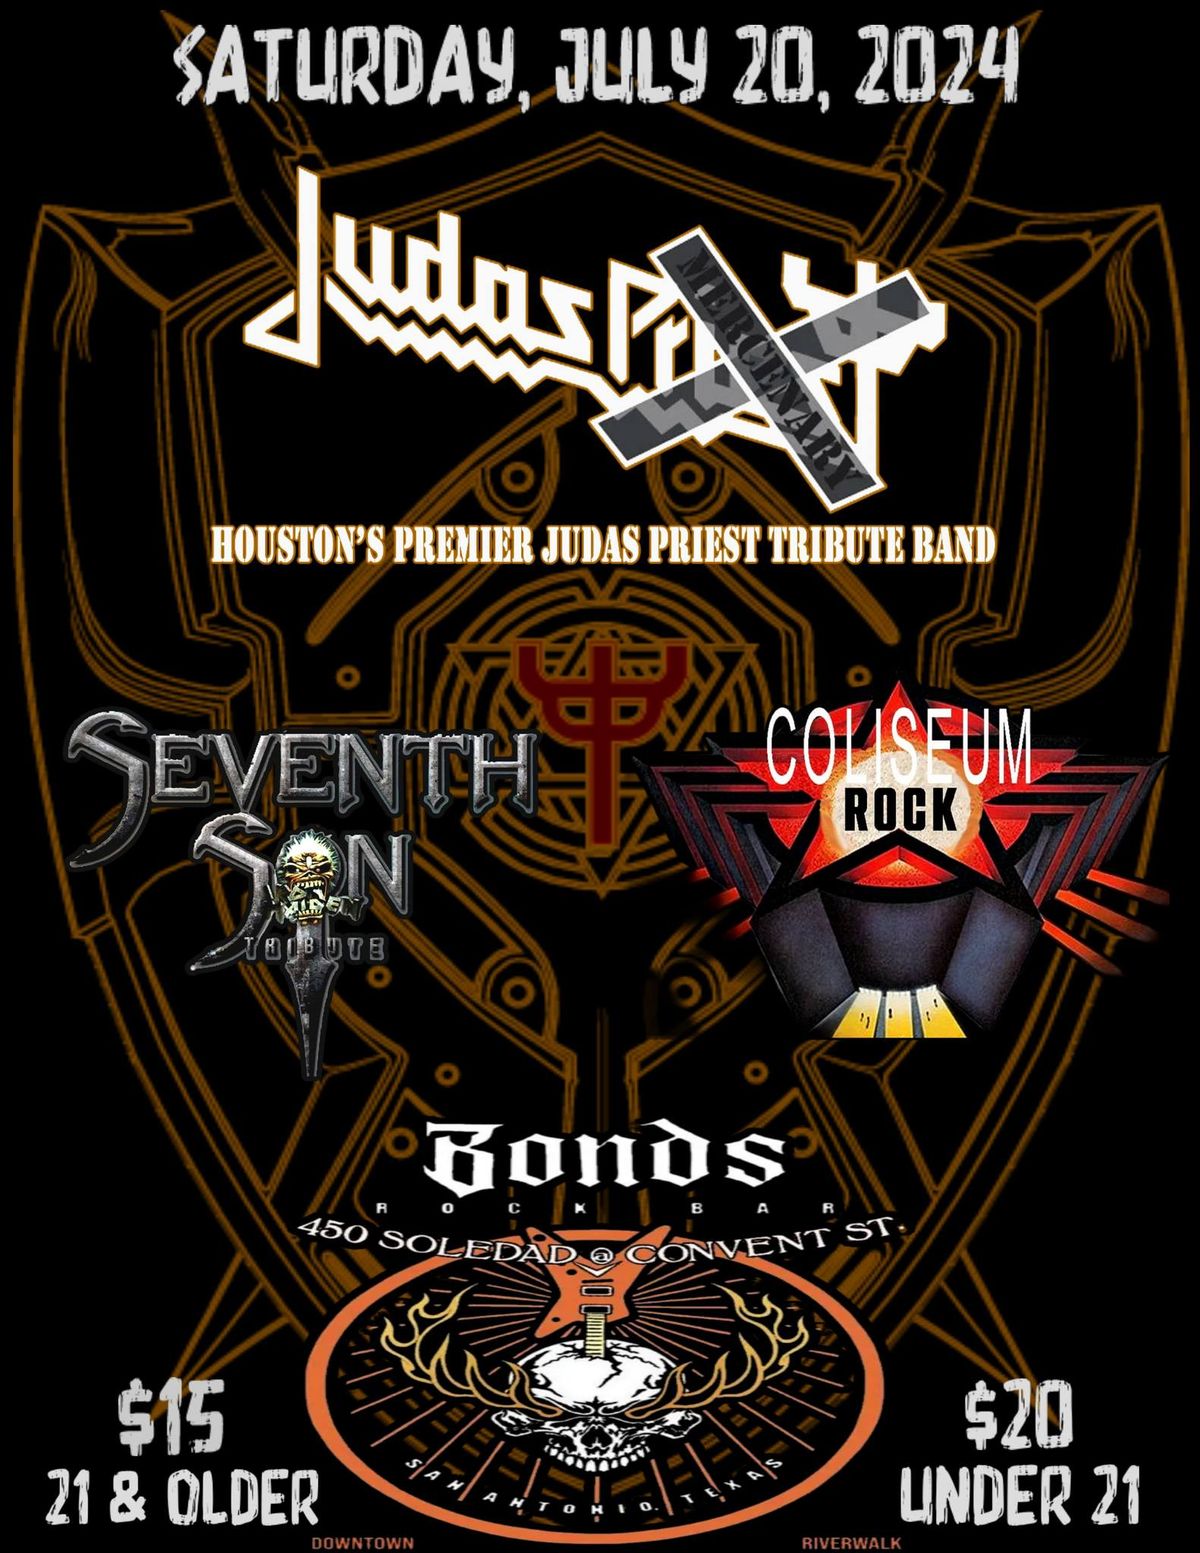 Judas X - Houston's Premier Judas Priest Tribute Band with Seventh Son and Coliseum Rock